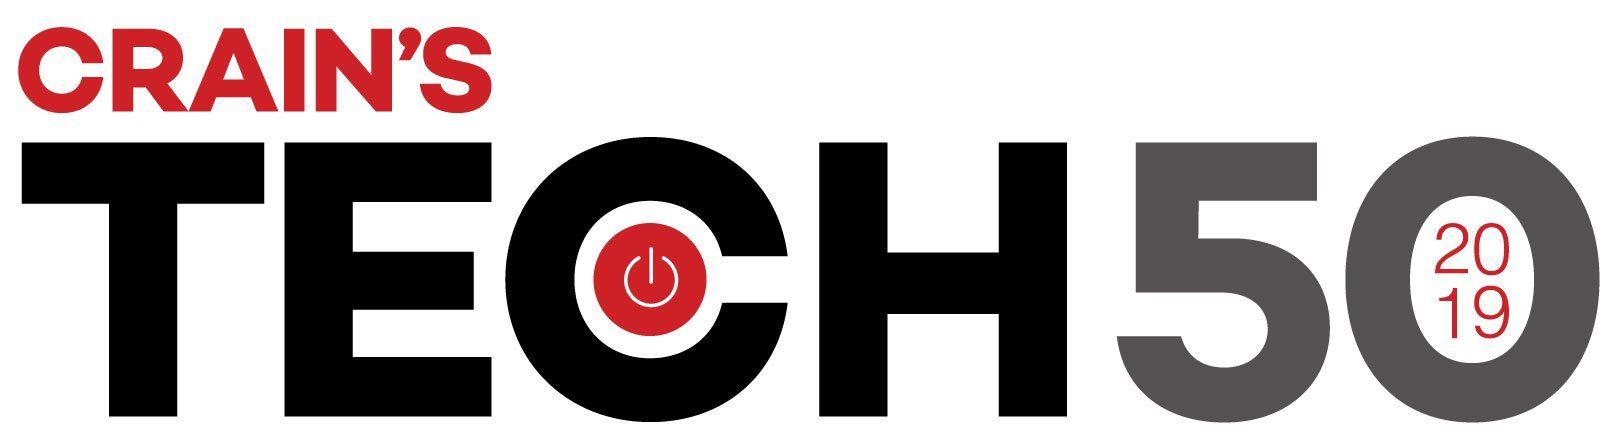 Crain Logo - Tech 50 2019 | Crain's Chicago Business